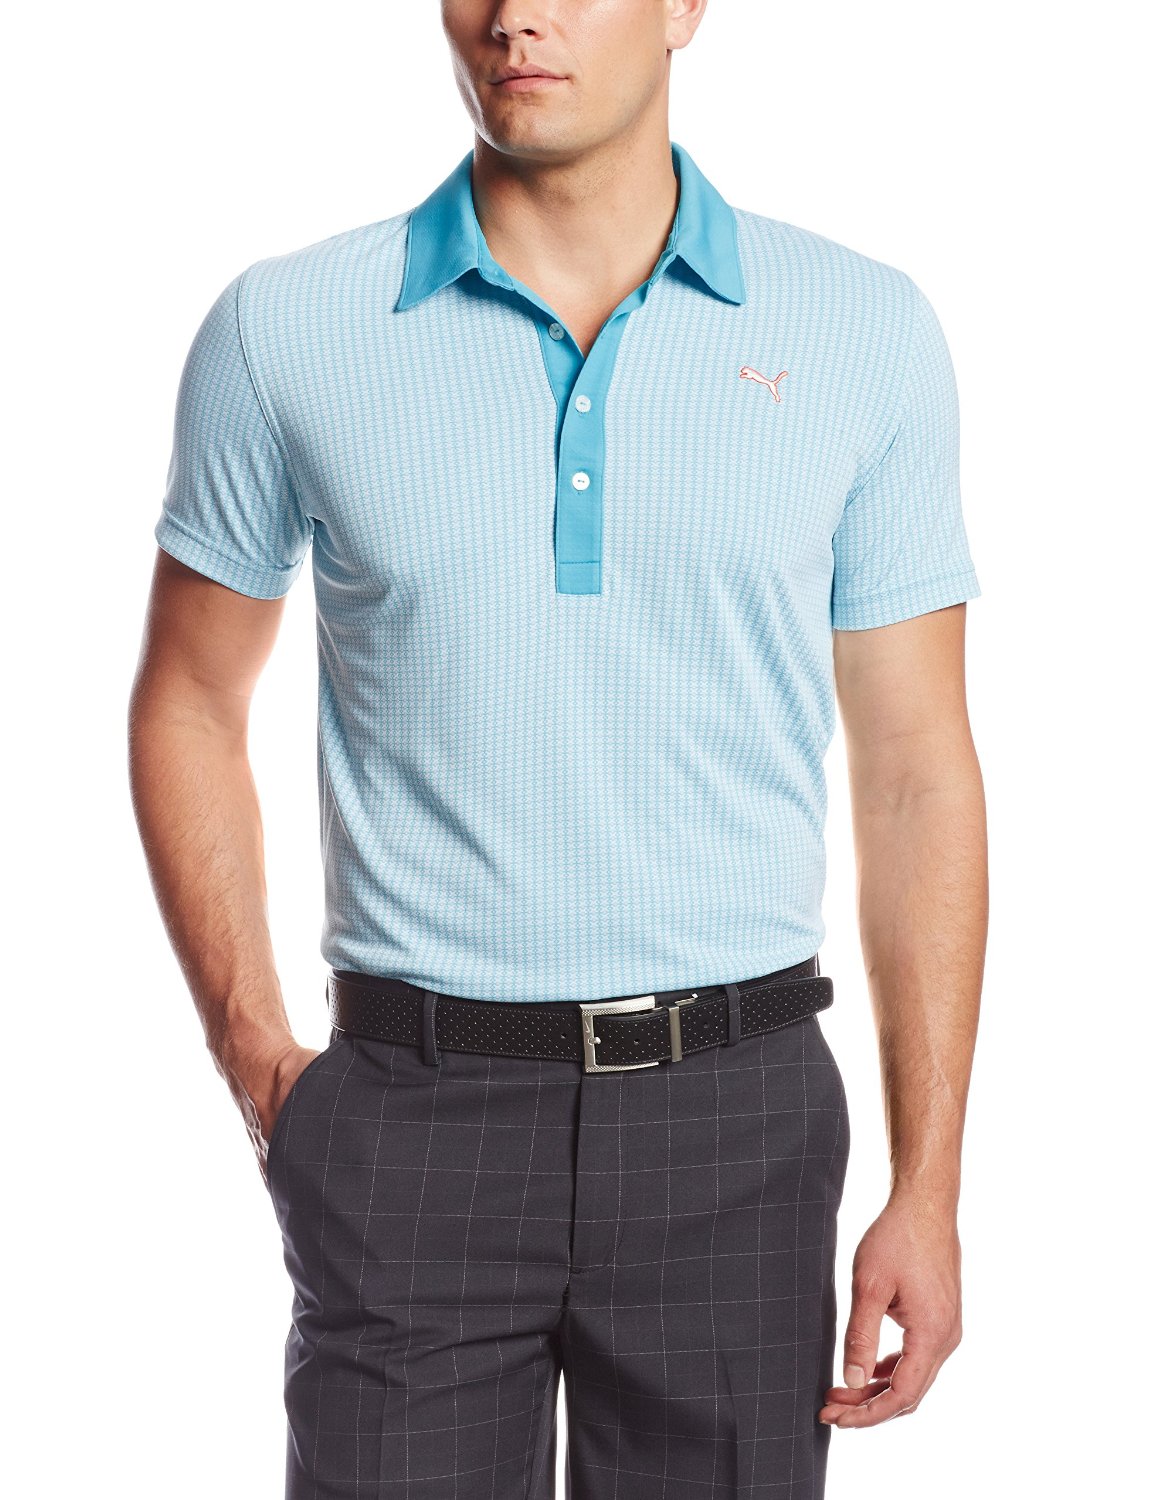 Mens NA Jacquard Pattern Golf Polo Shirts